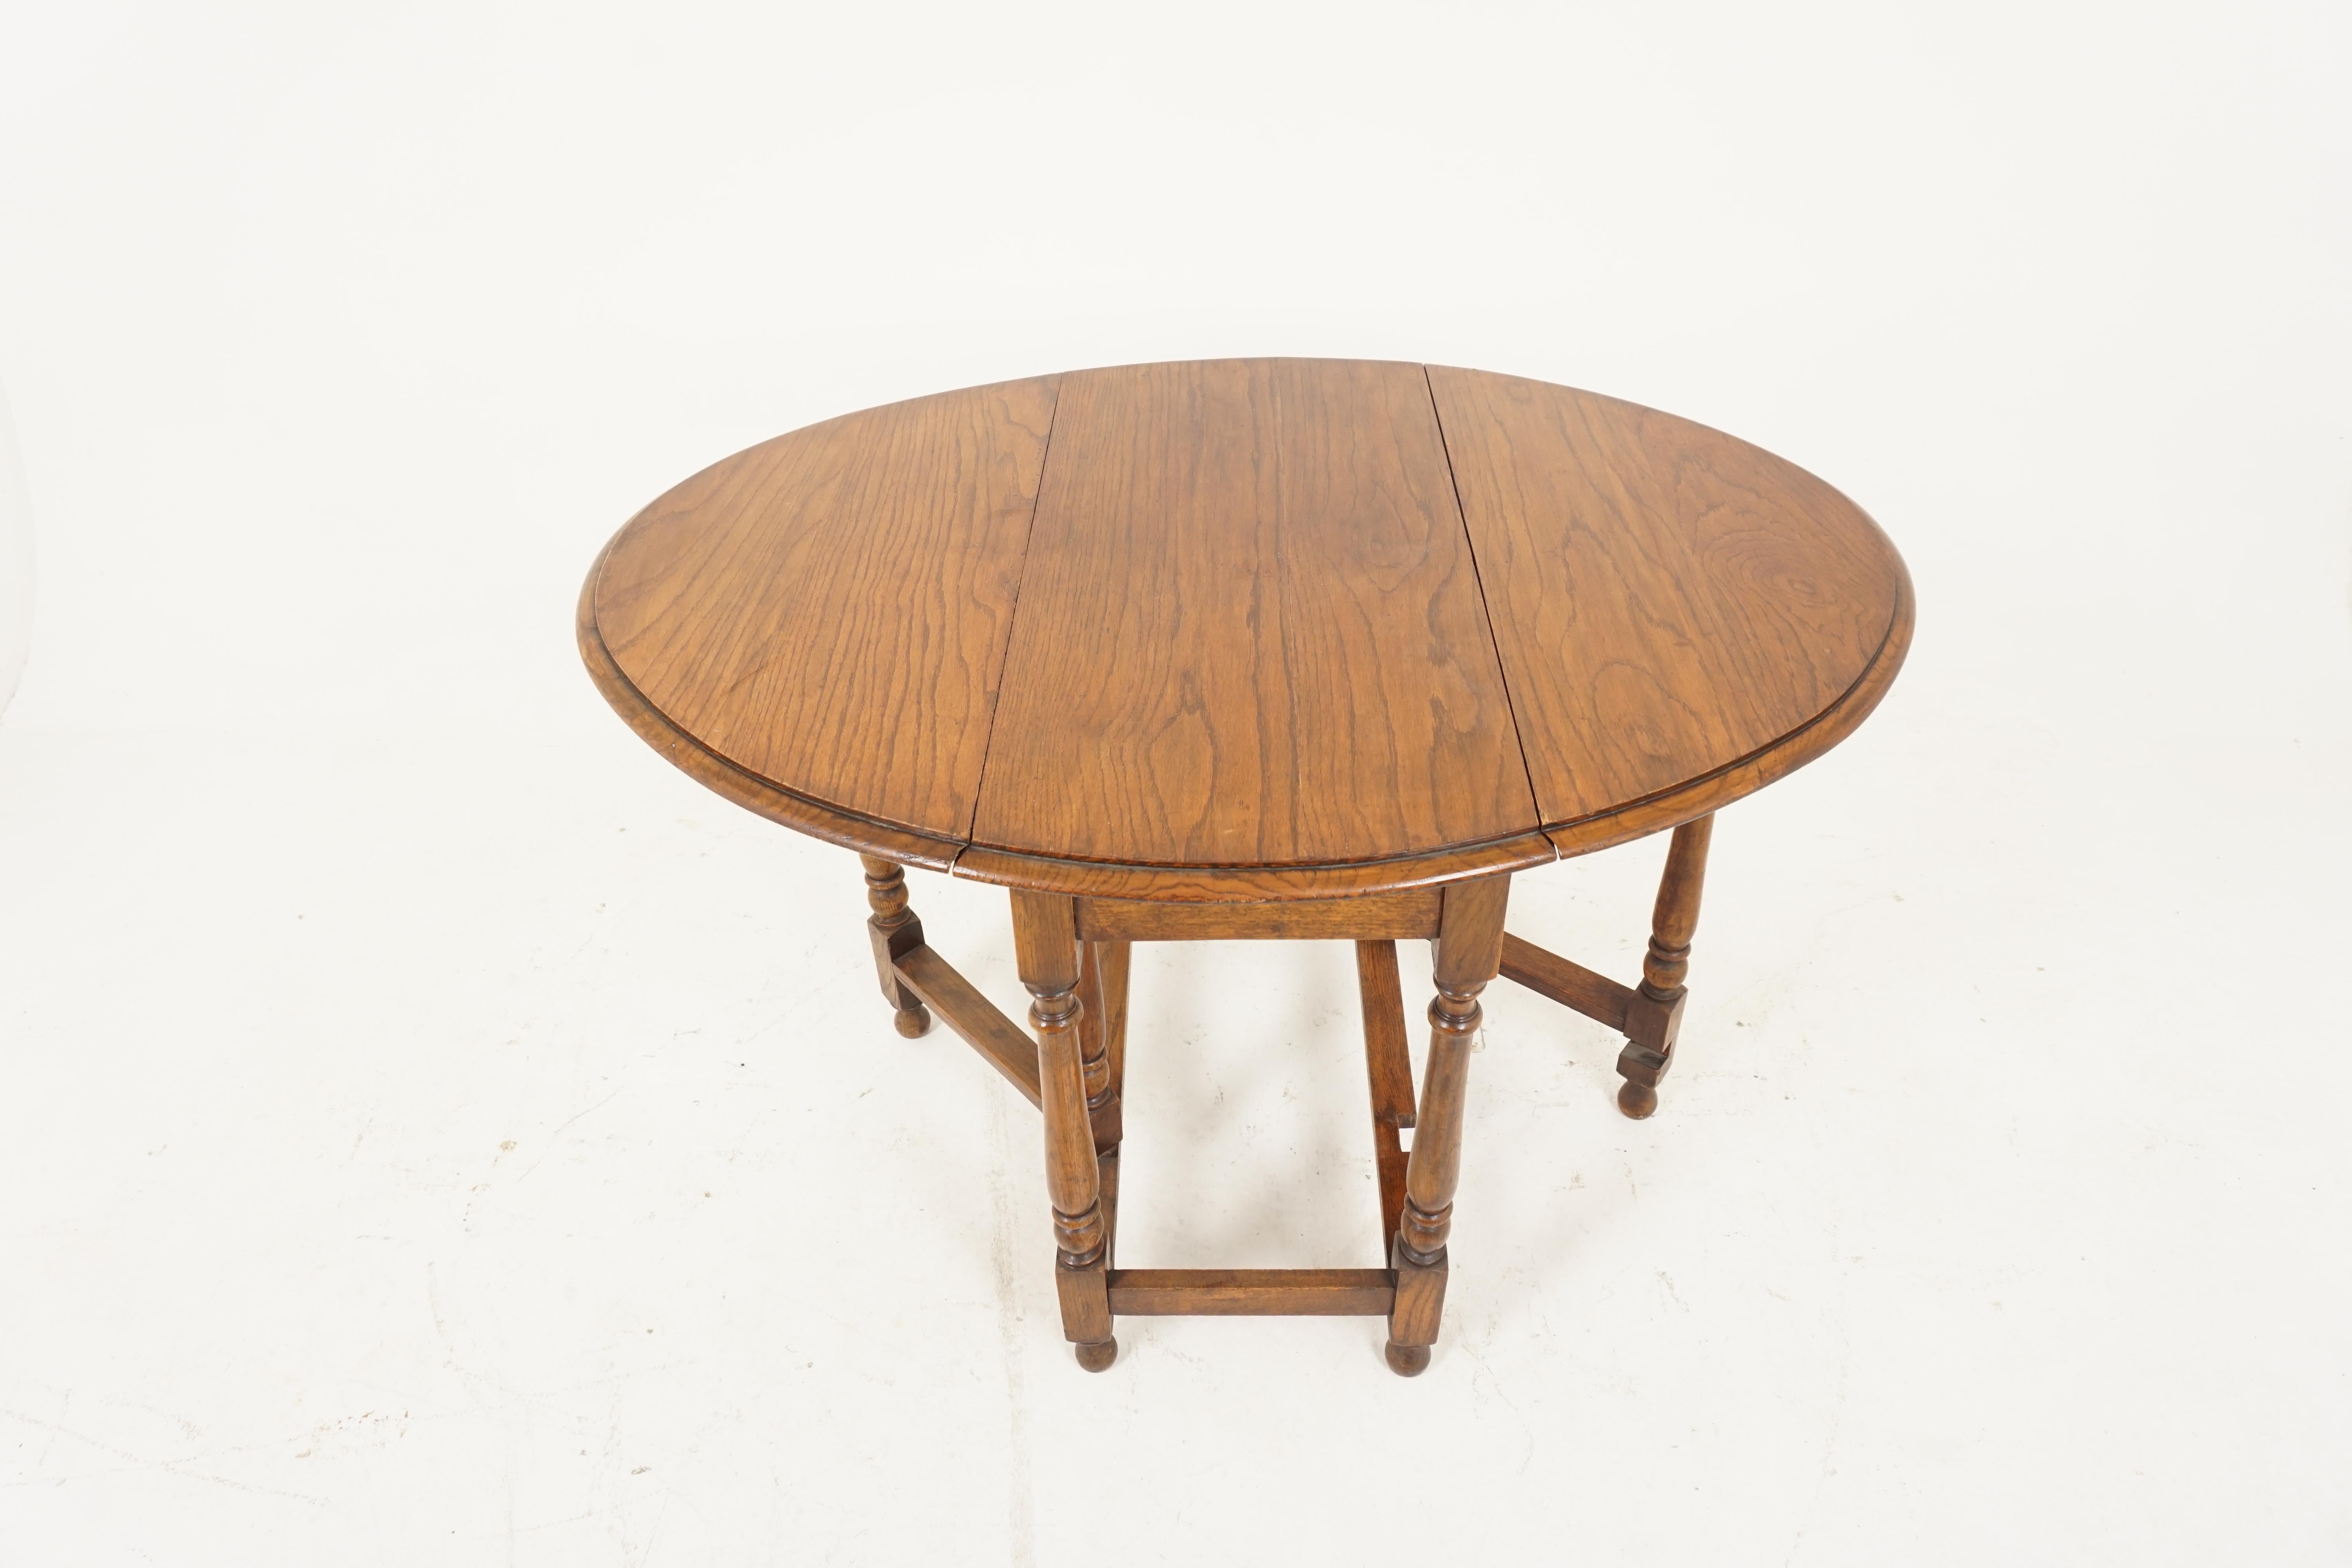 Hand-Crafted Antique Gateleg Table, Oak, Oval Drop Leaf Table, Scotland, 1920